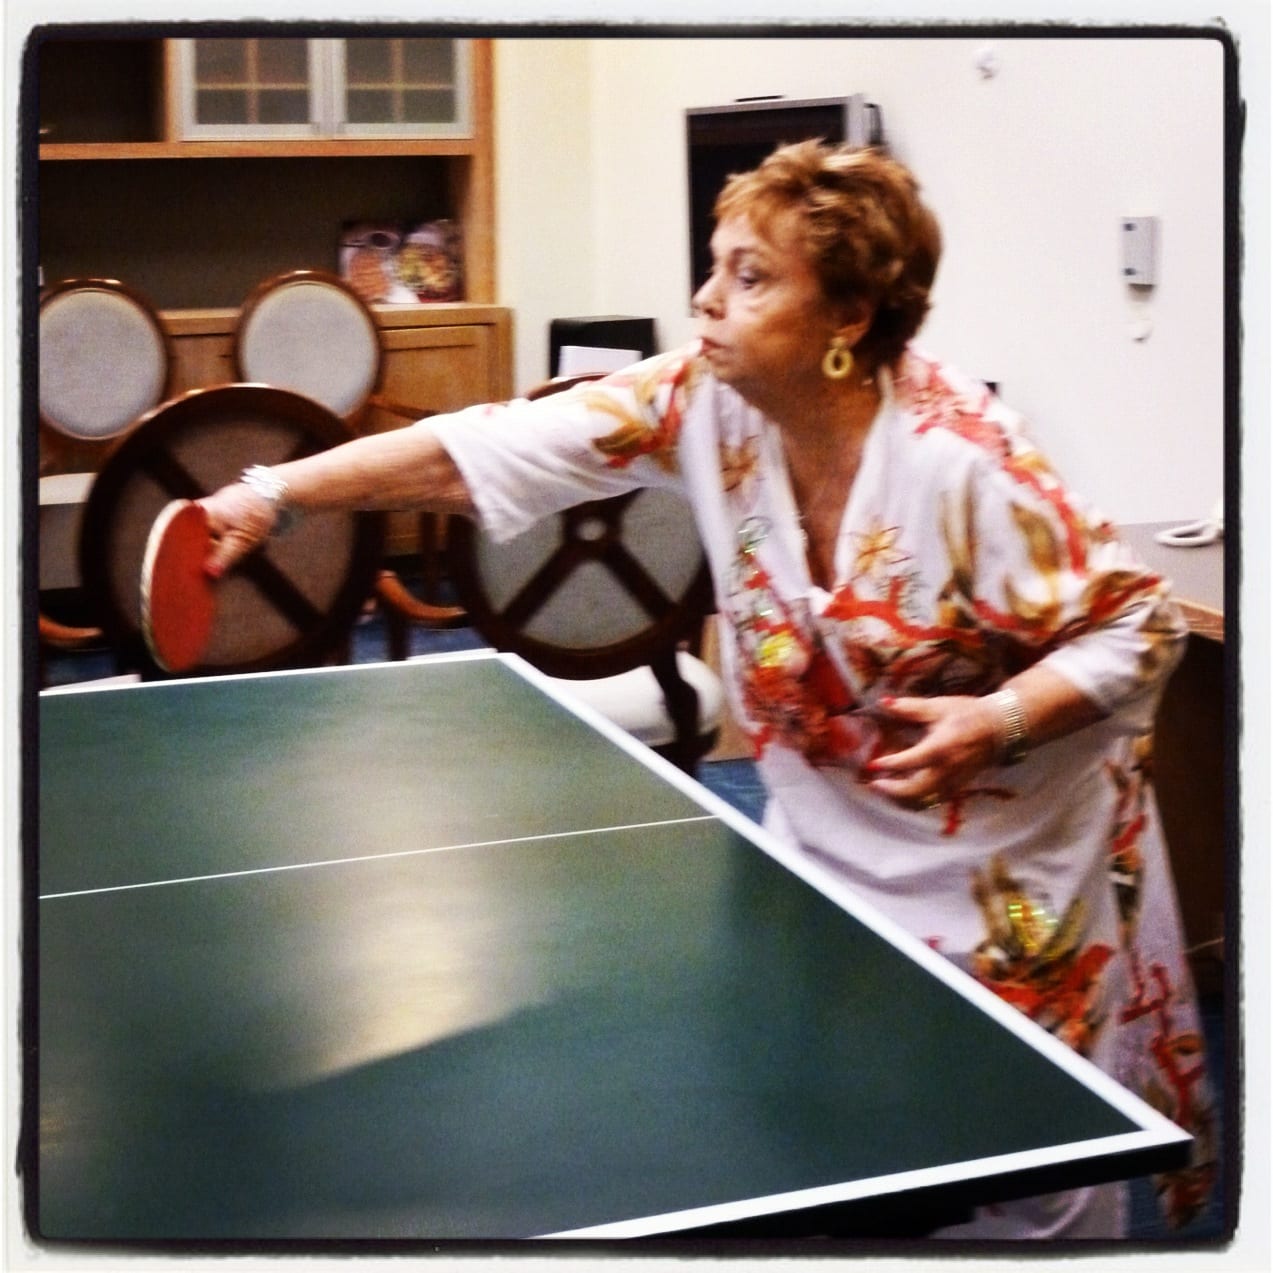 Liat's grandma playing ping pong in a mumu